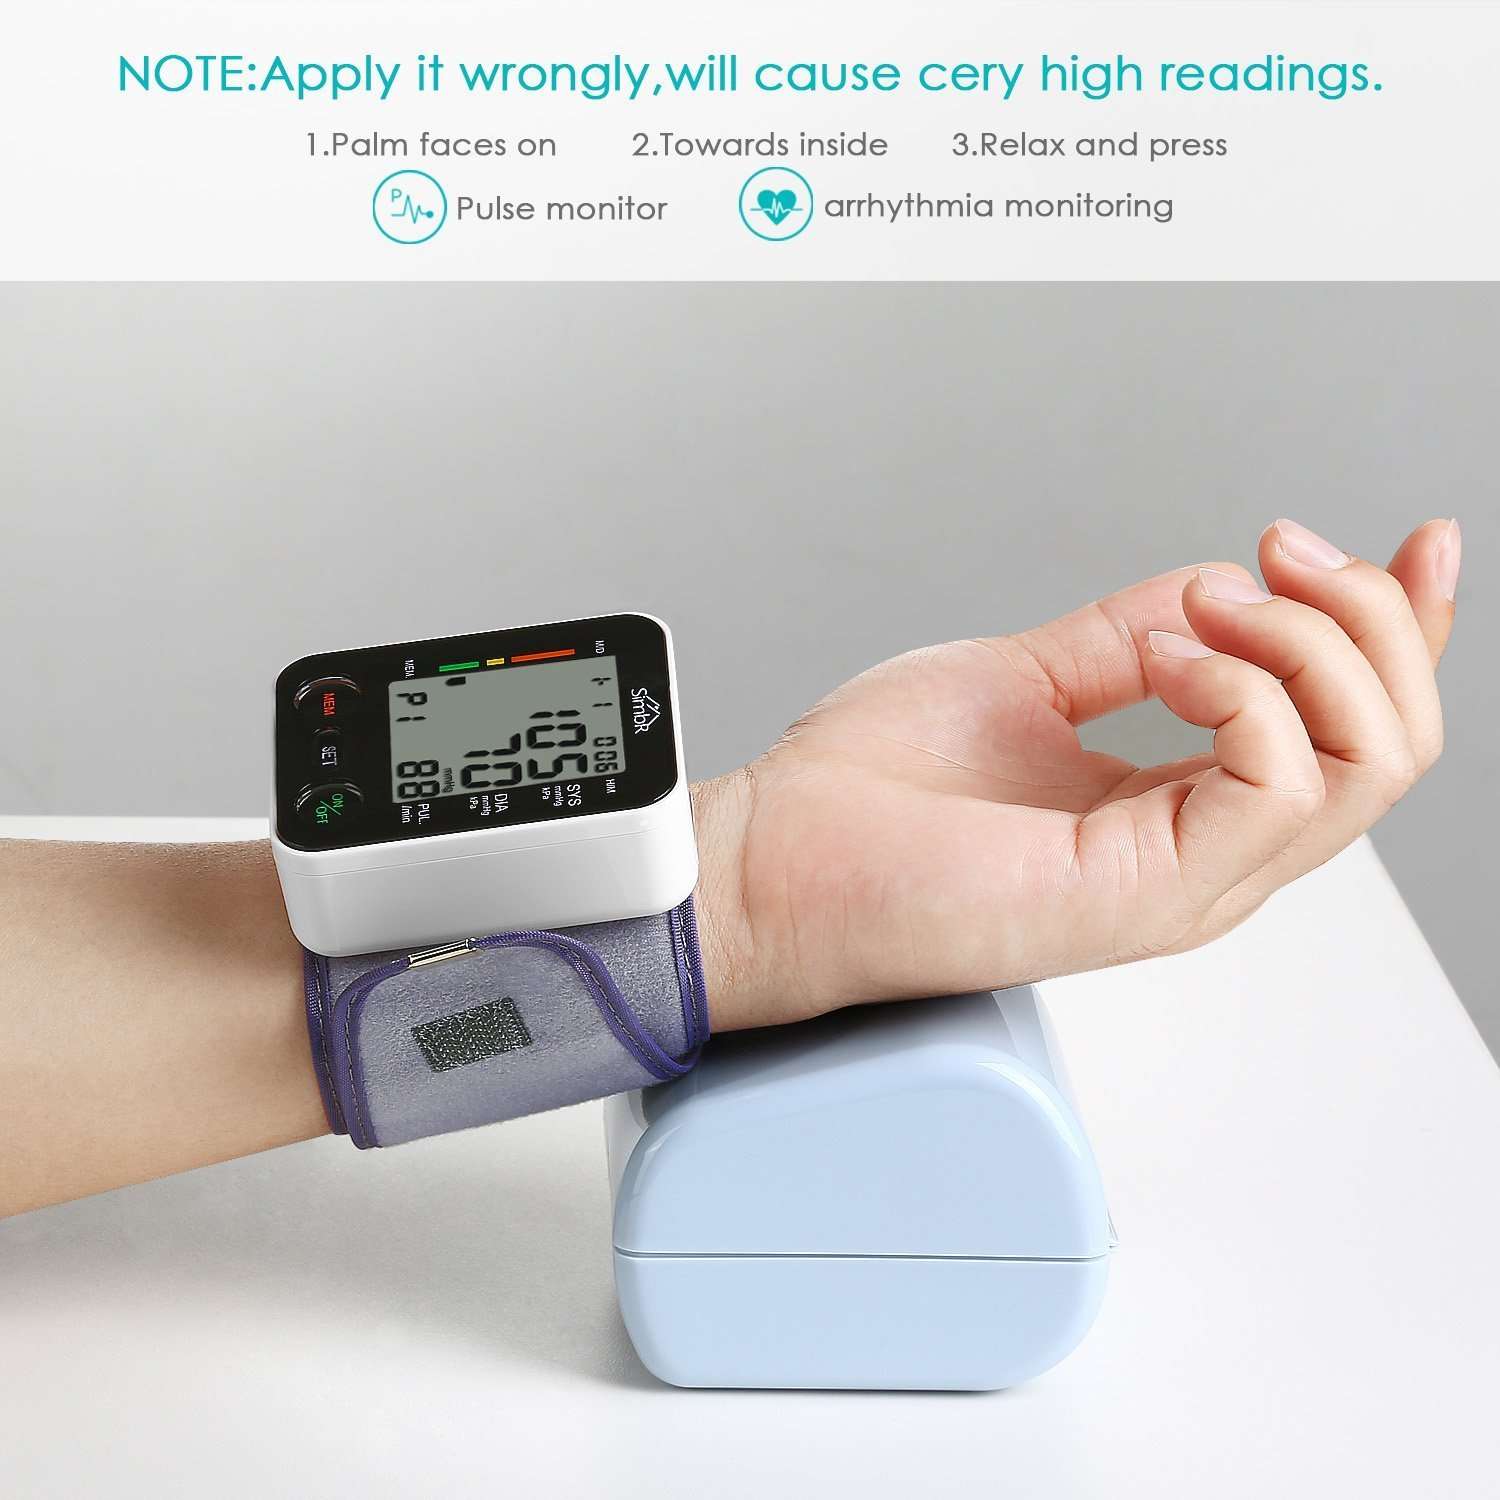 SIMBR Wrist Blood Pressure Monitor